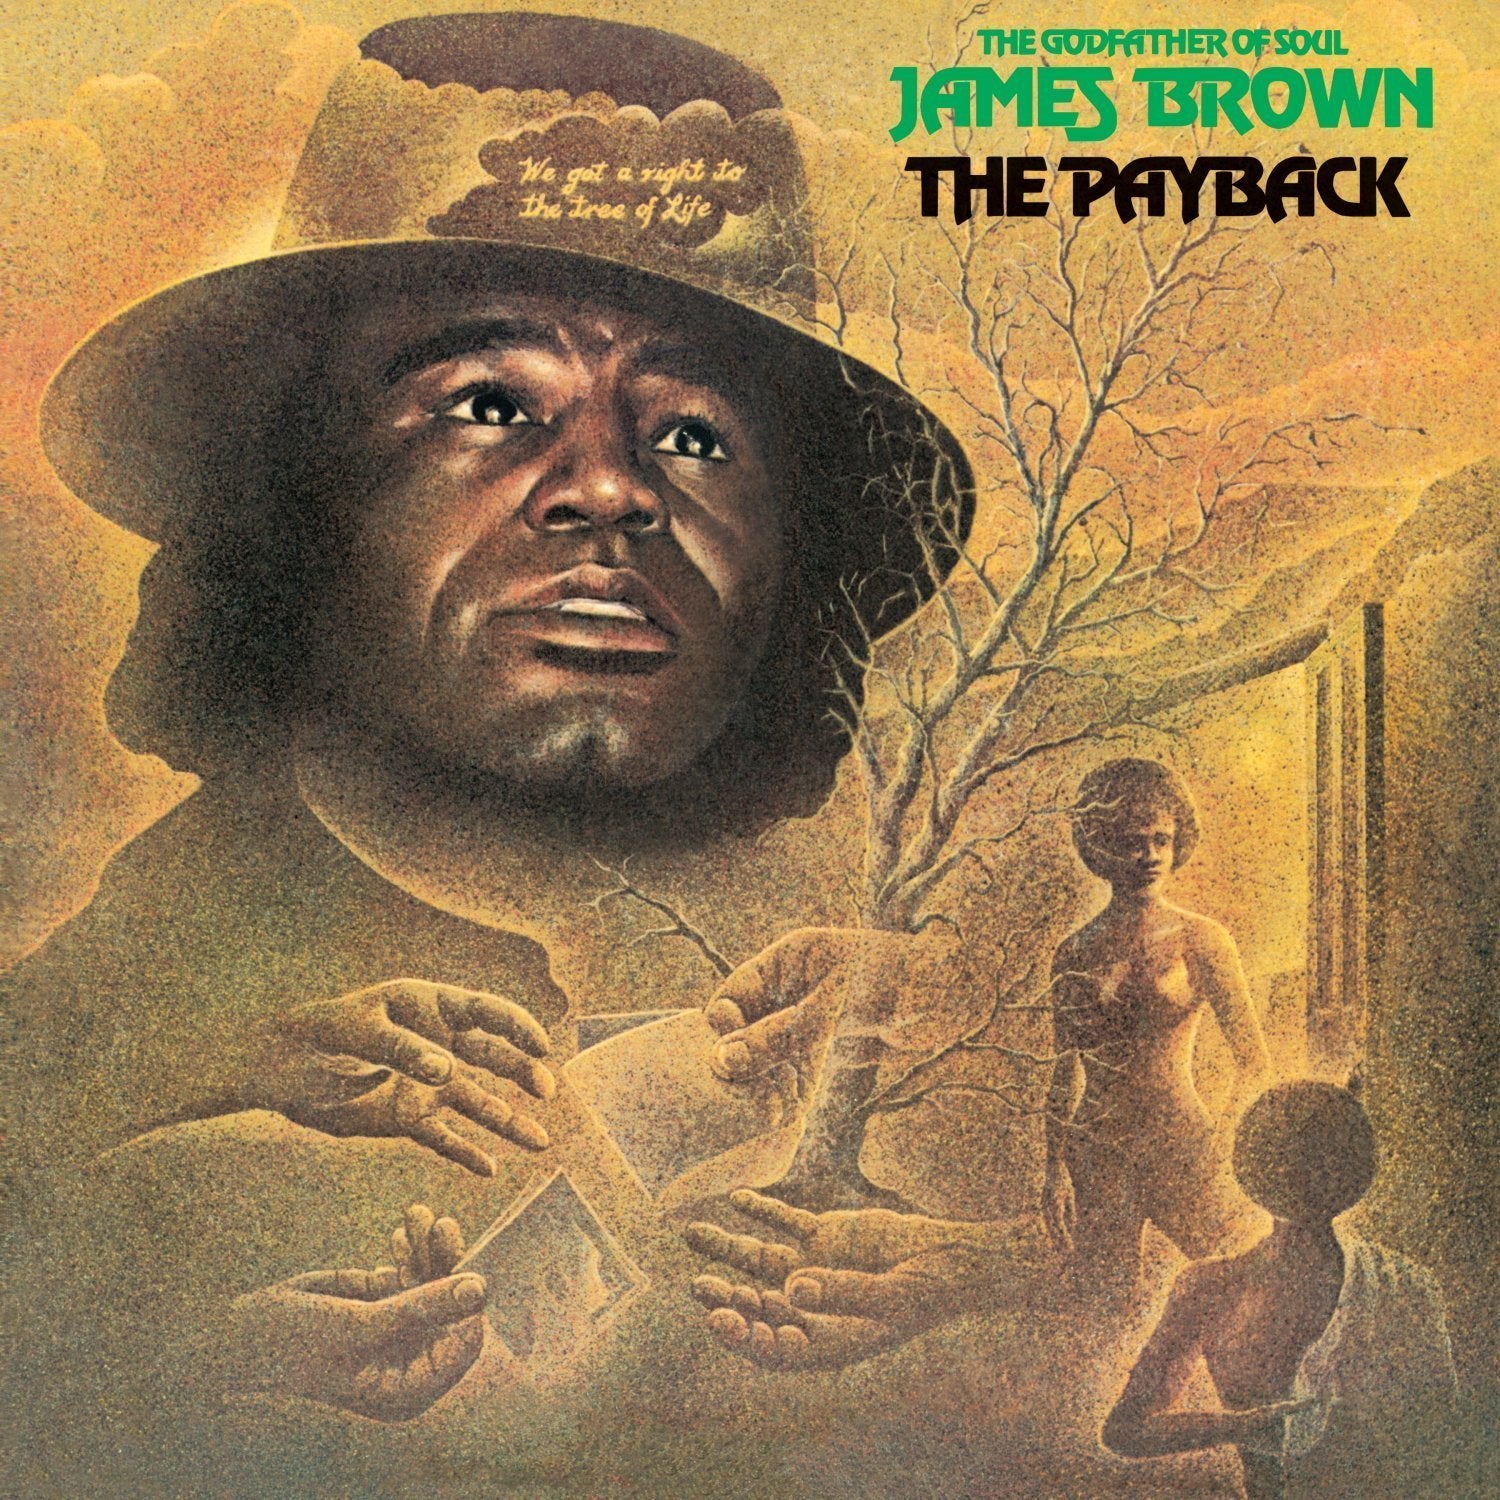 The Best James Brown Albums To Own On Vinyl - Vinyl Me, Please